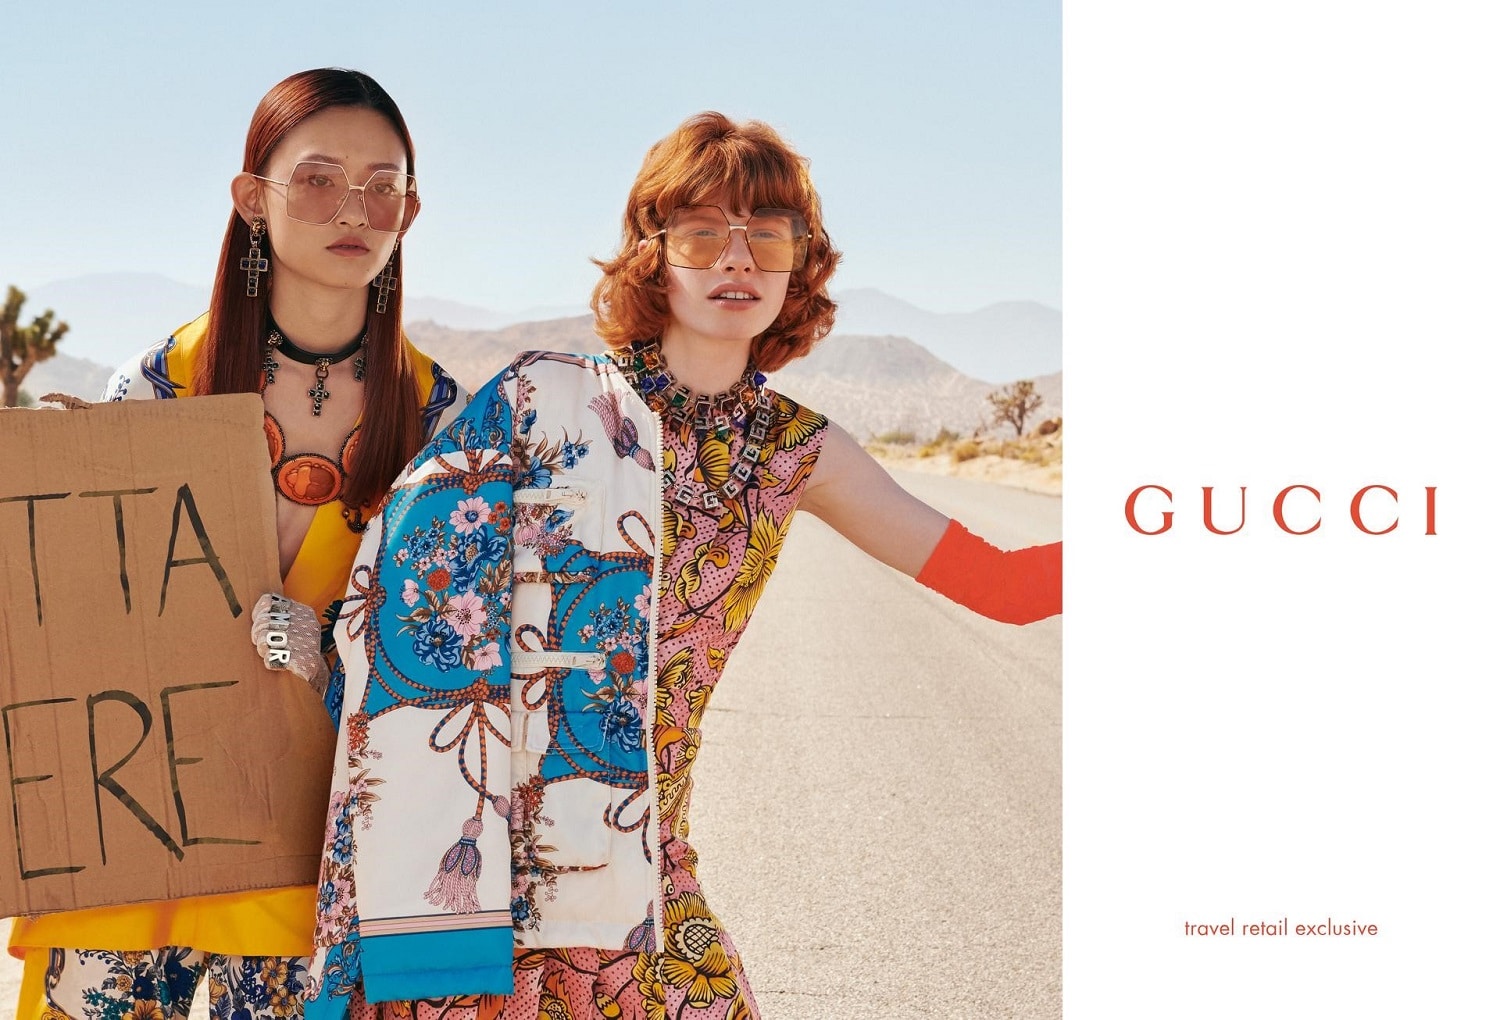 Kering Eyewear Launches 2nd Edition Gucci Eyewear Global Travel